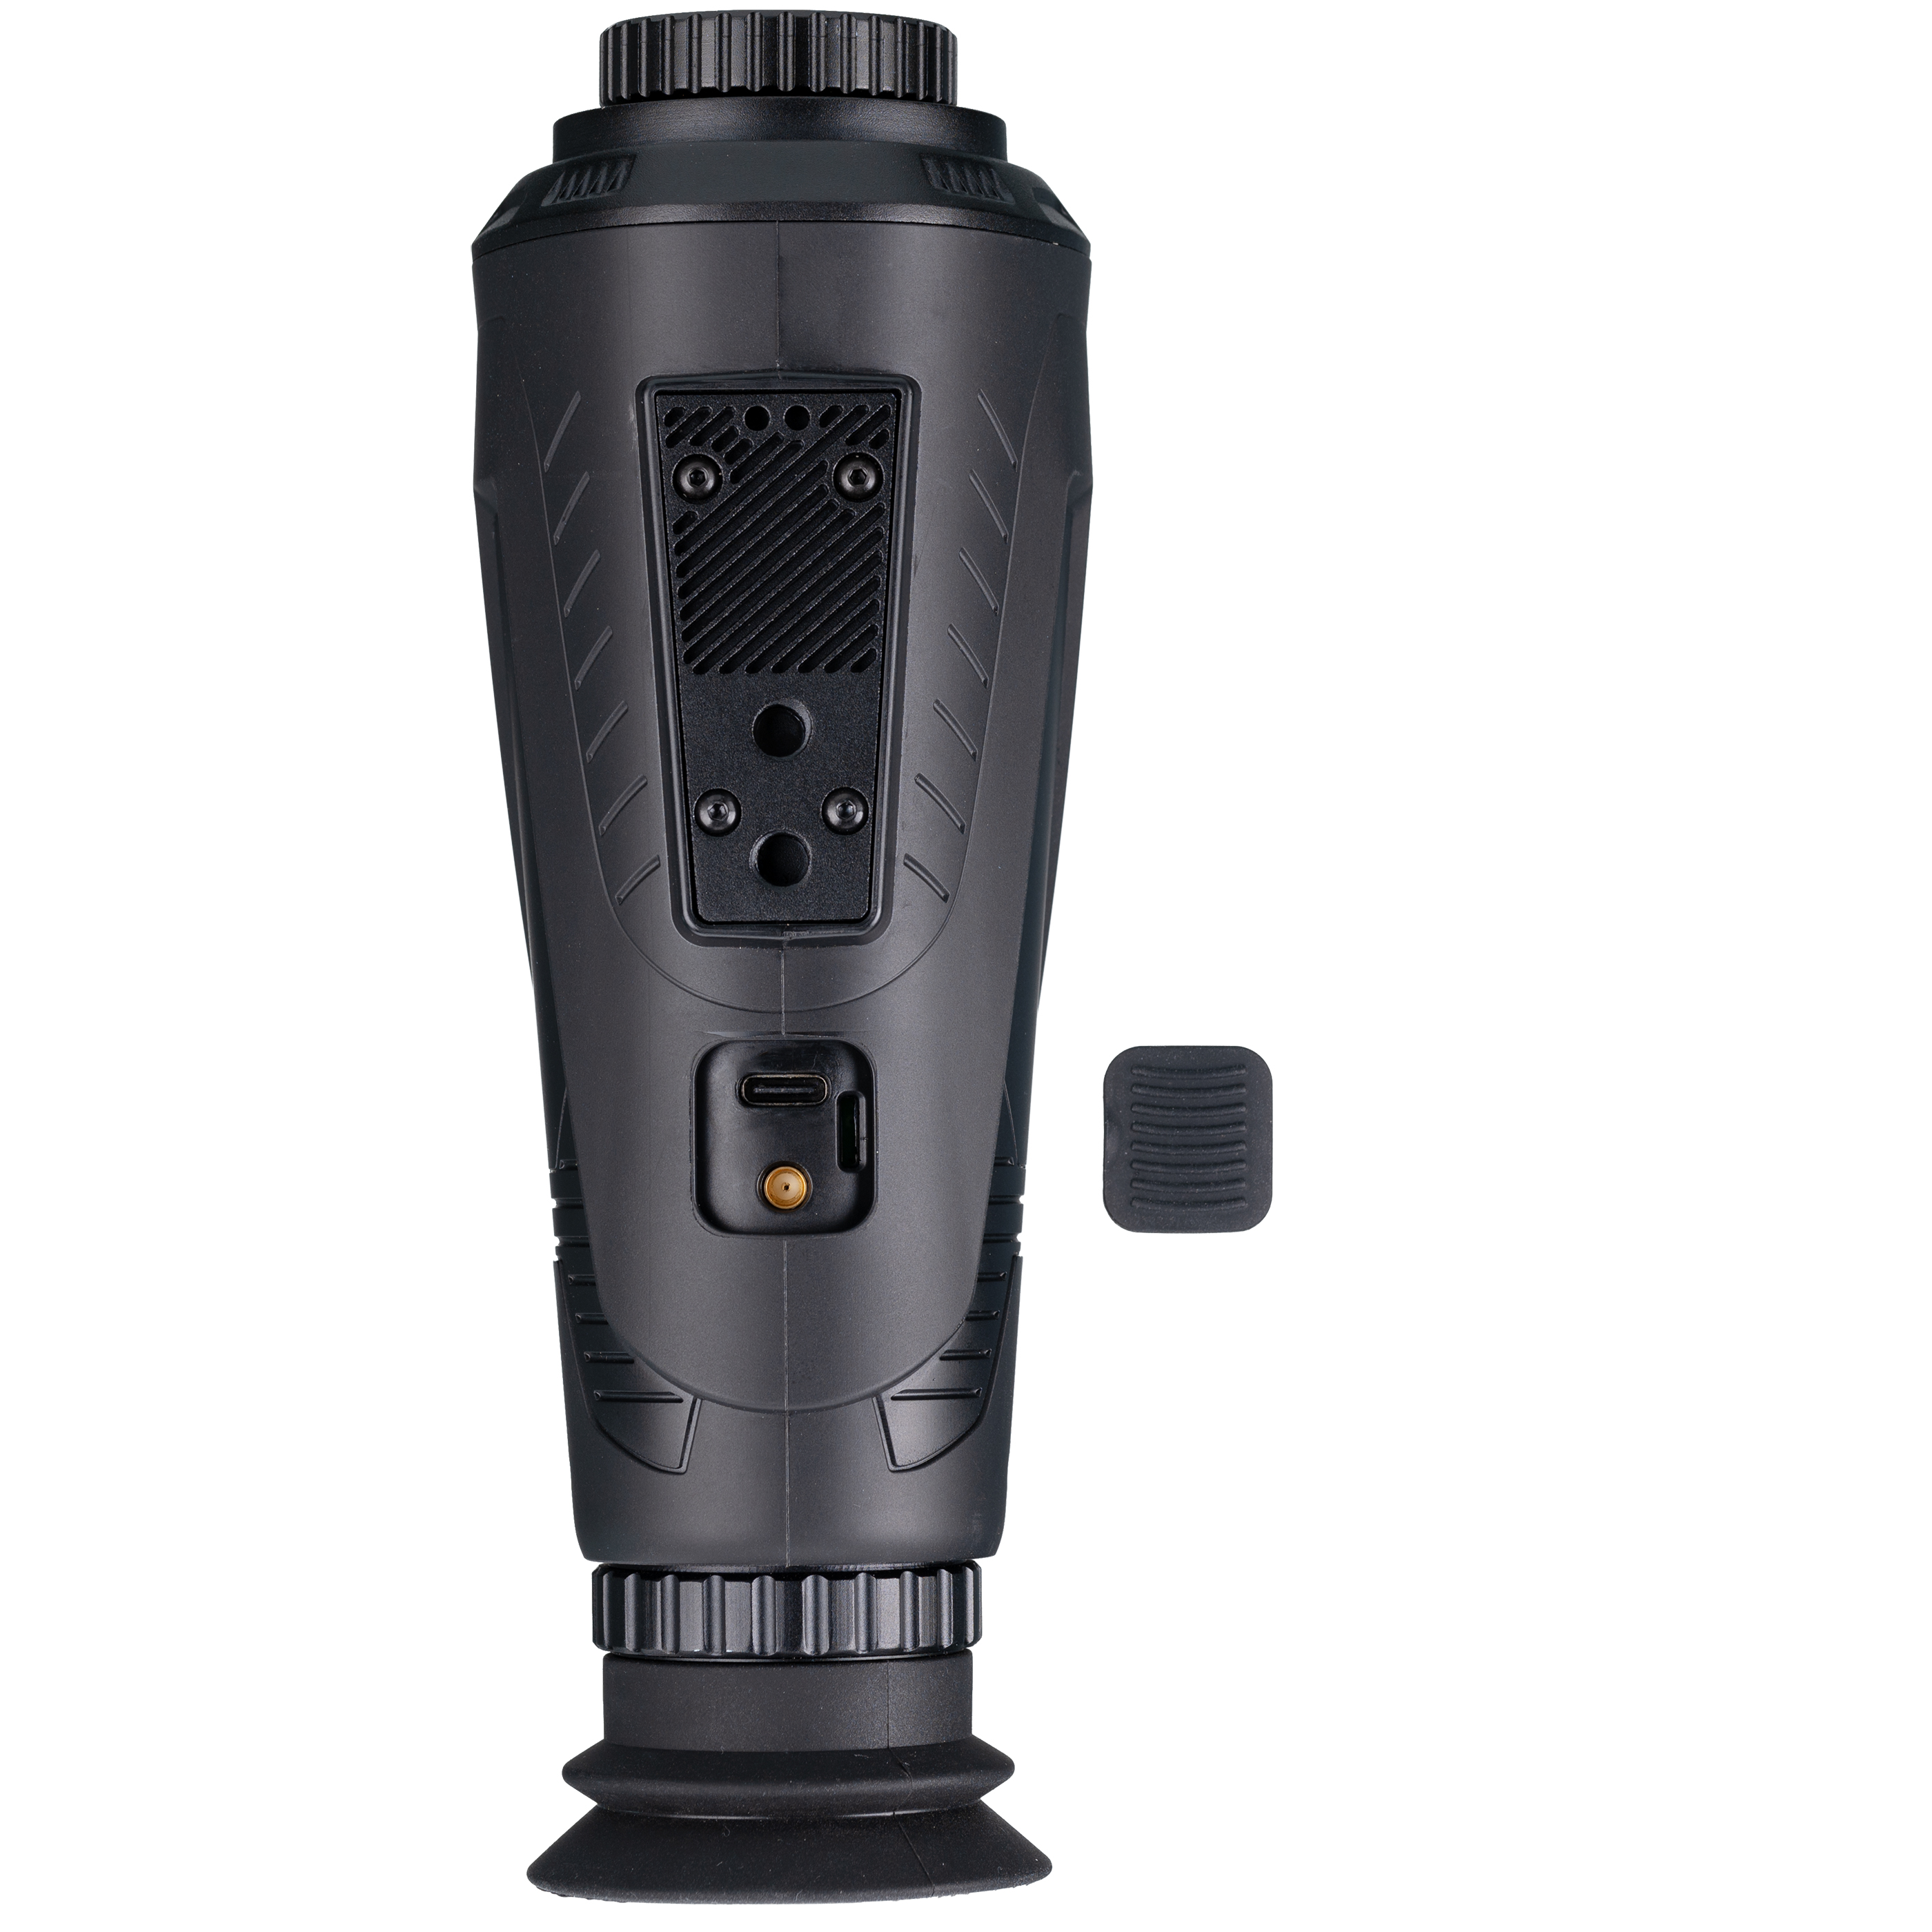 BRESSER TNS3 Wi-Fi thermal imaging camera